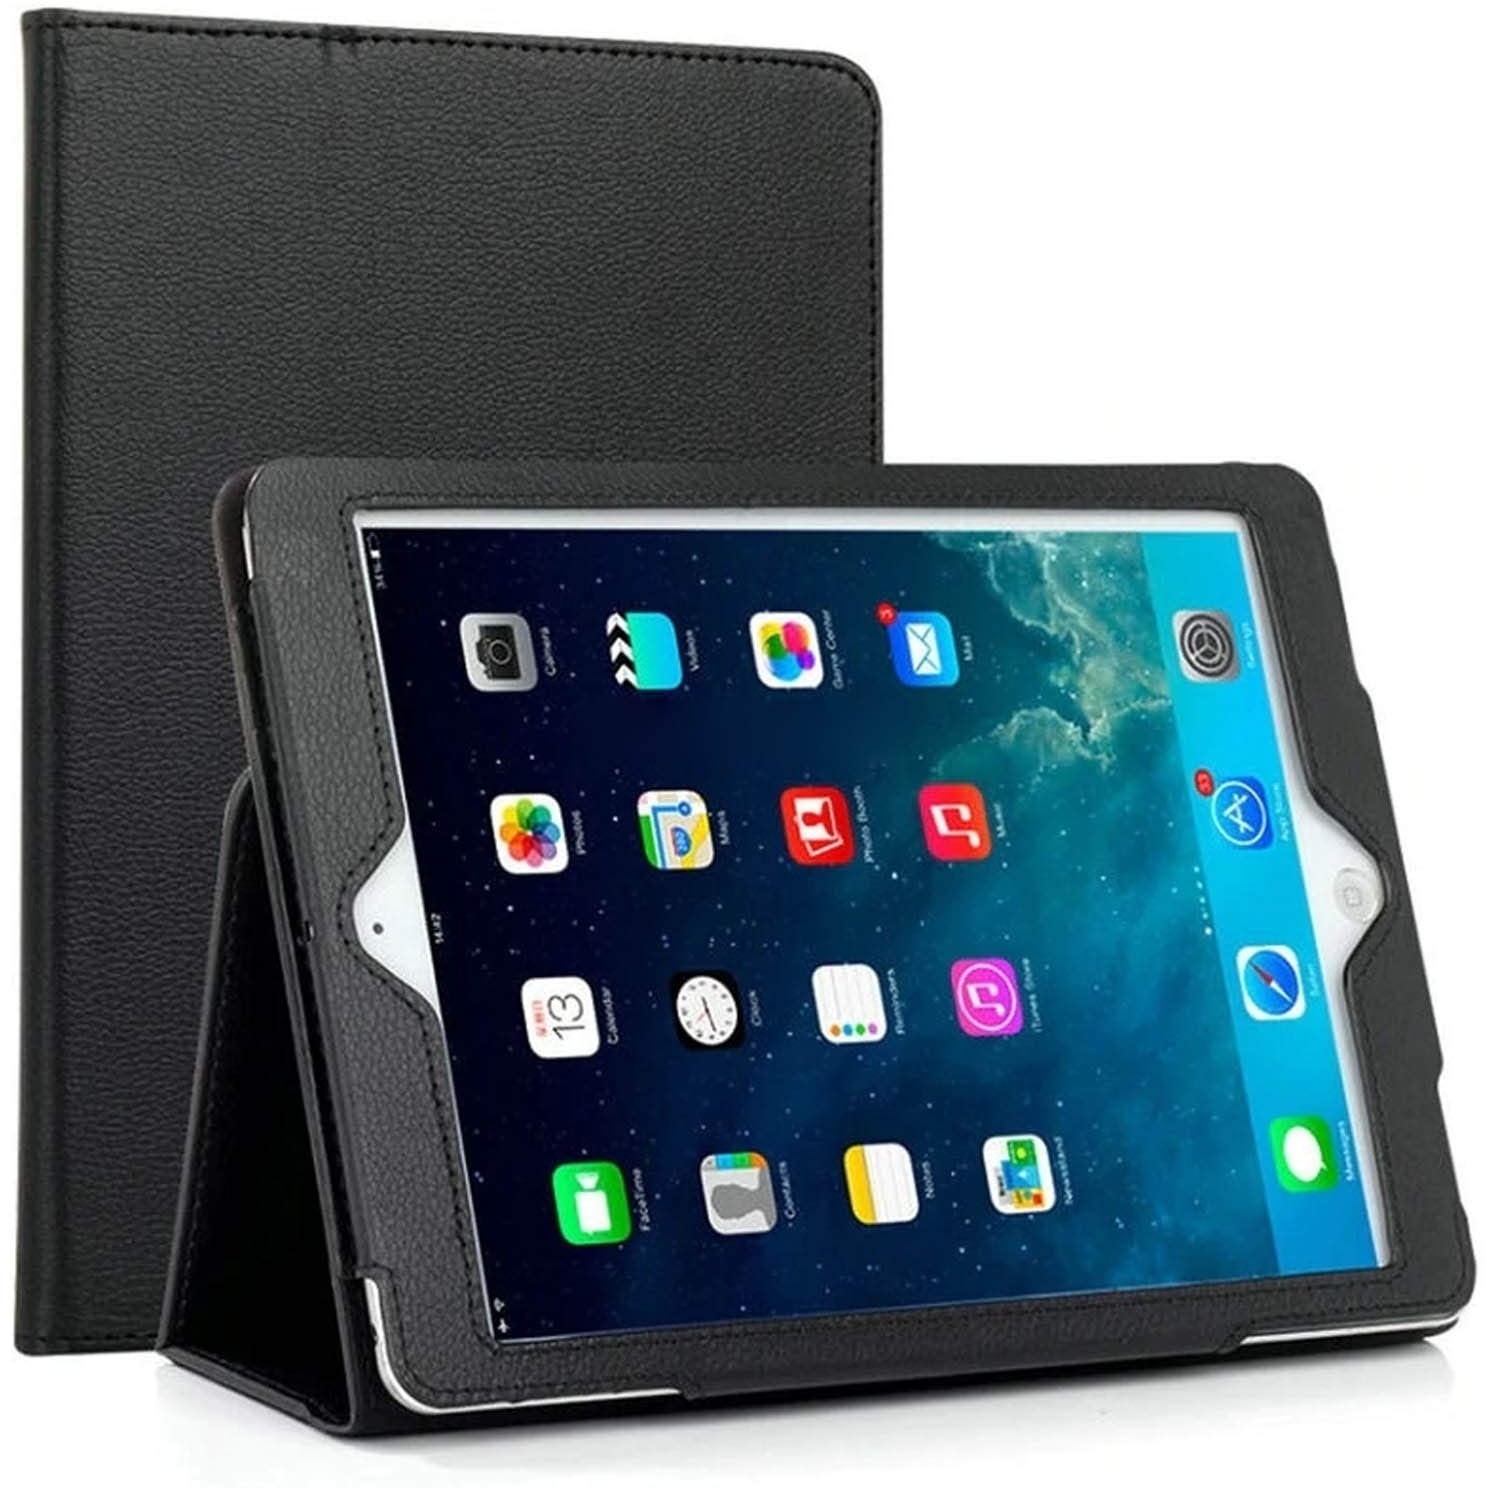 Lobwerk Hülle für Apple iPad Mini 4 und iPad Mini 5 7.9 Zoll Smart Cover Etui mit Stand Funktion Schwarz